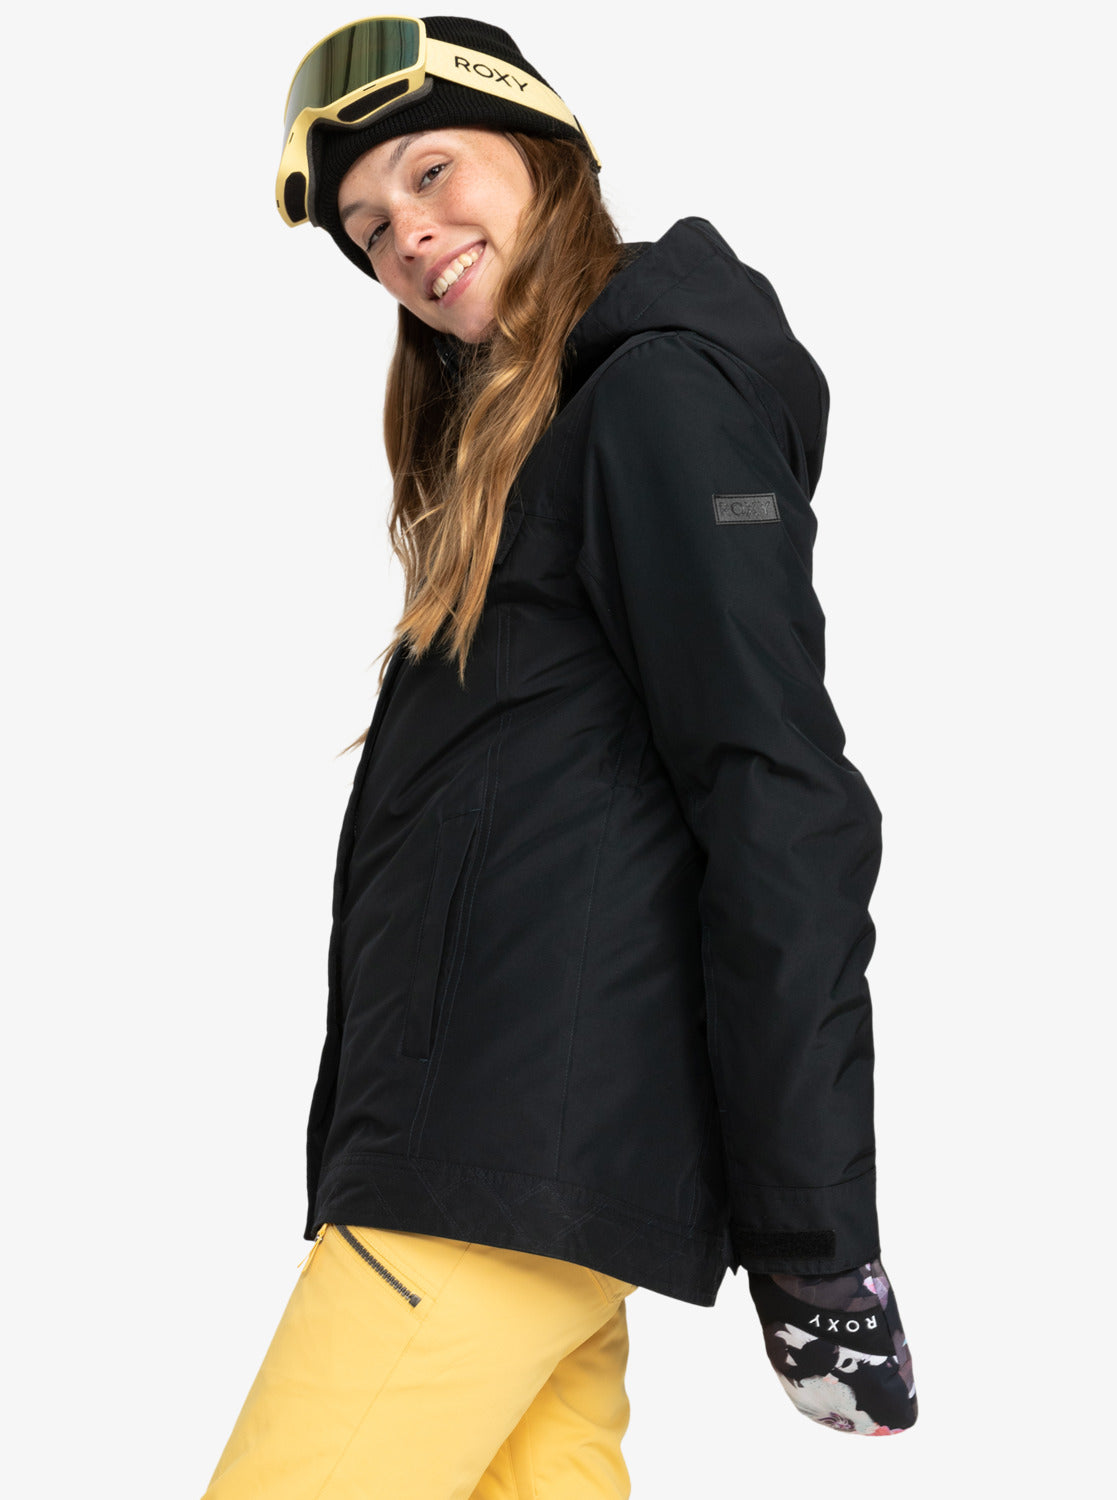 Roxy Jacket Dry Flight Insulated 5k Waterproof Breathable Ski/Snowboard  Small